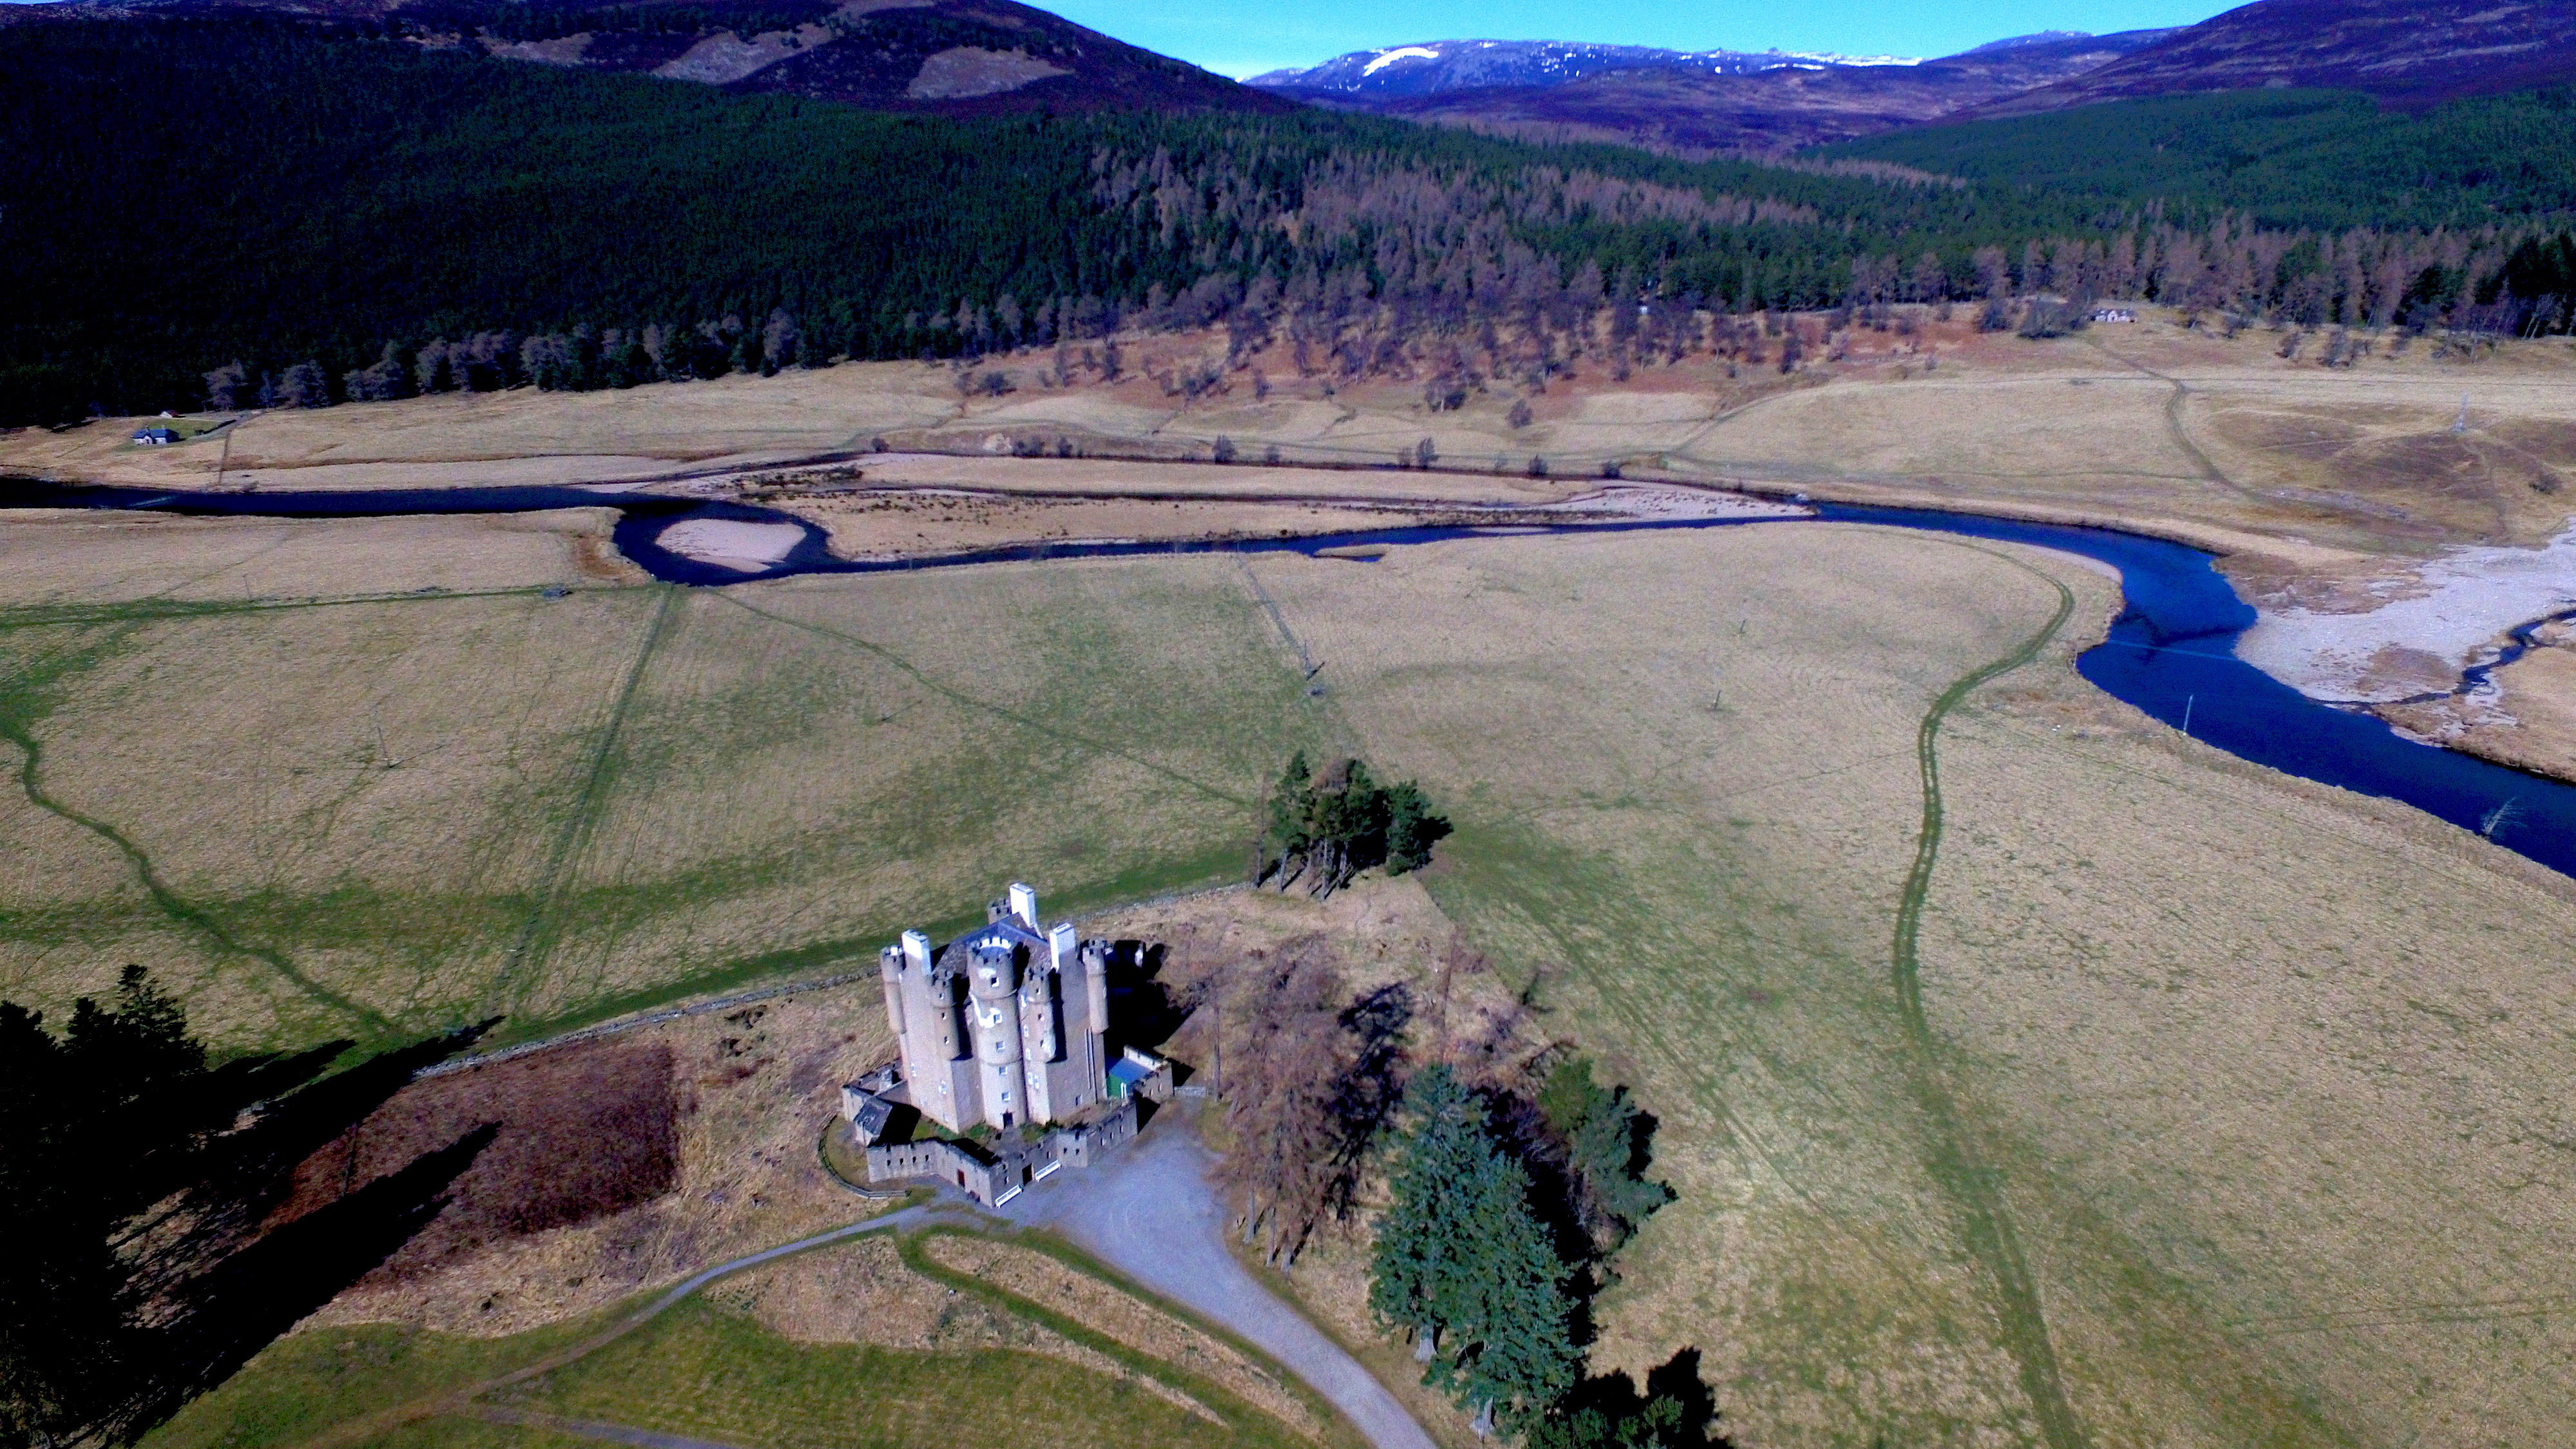 Braemar castle, Cairngorms National Park, Braemar.